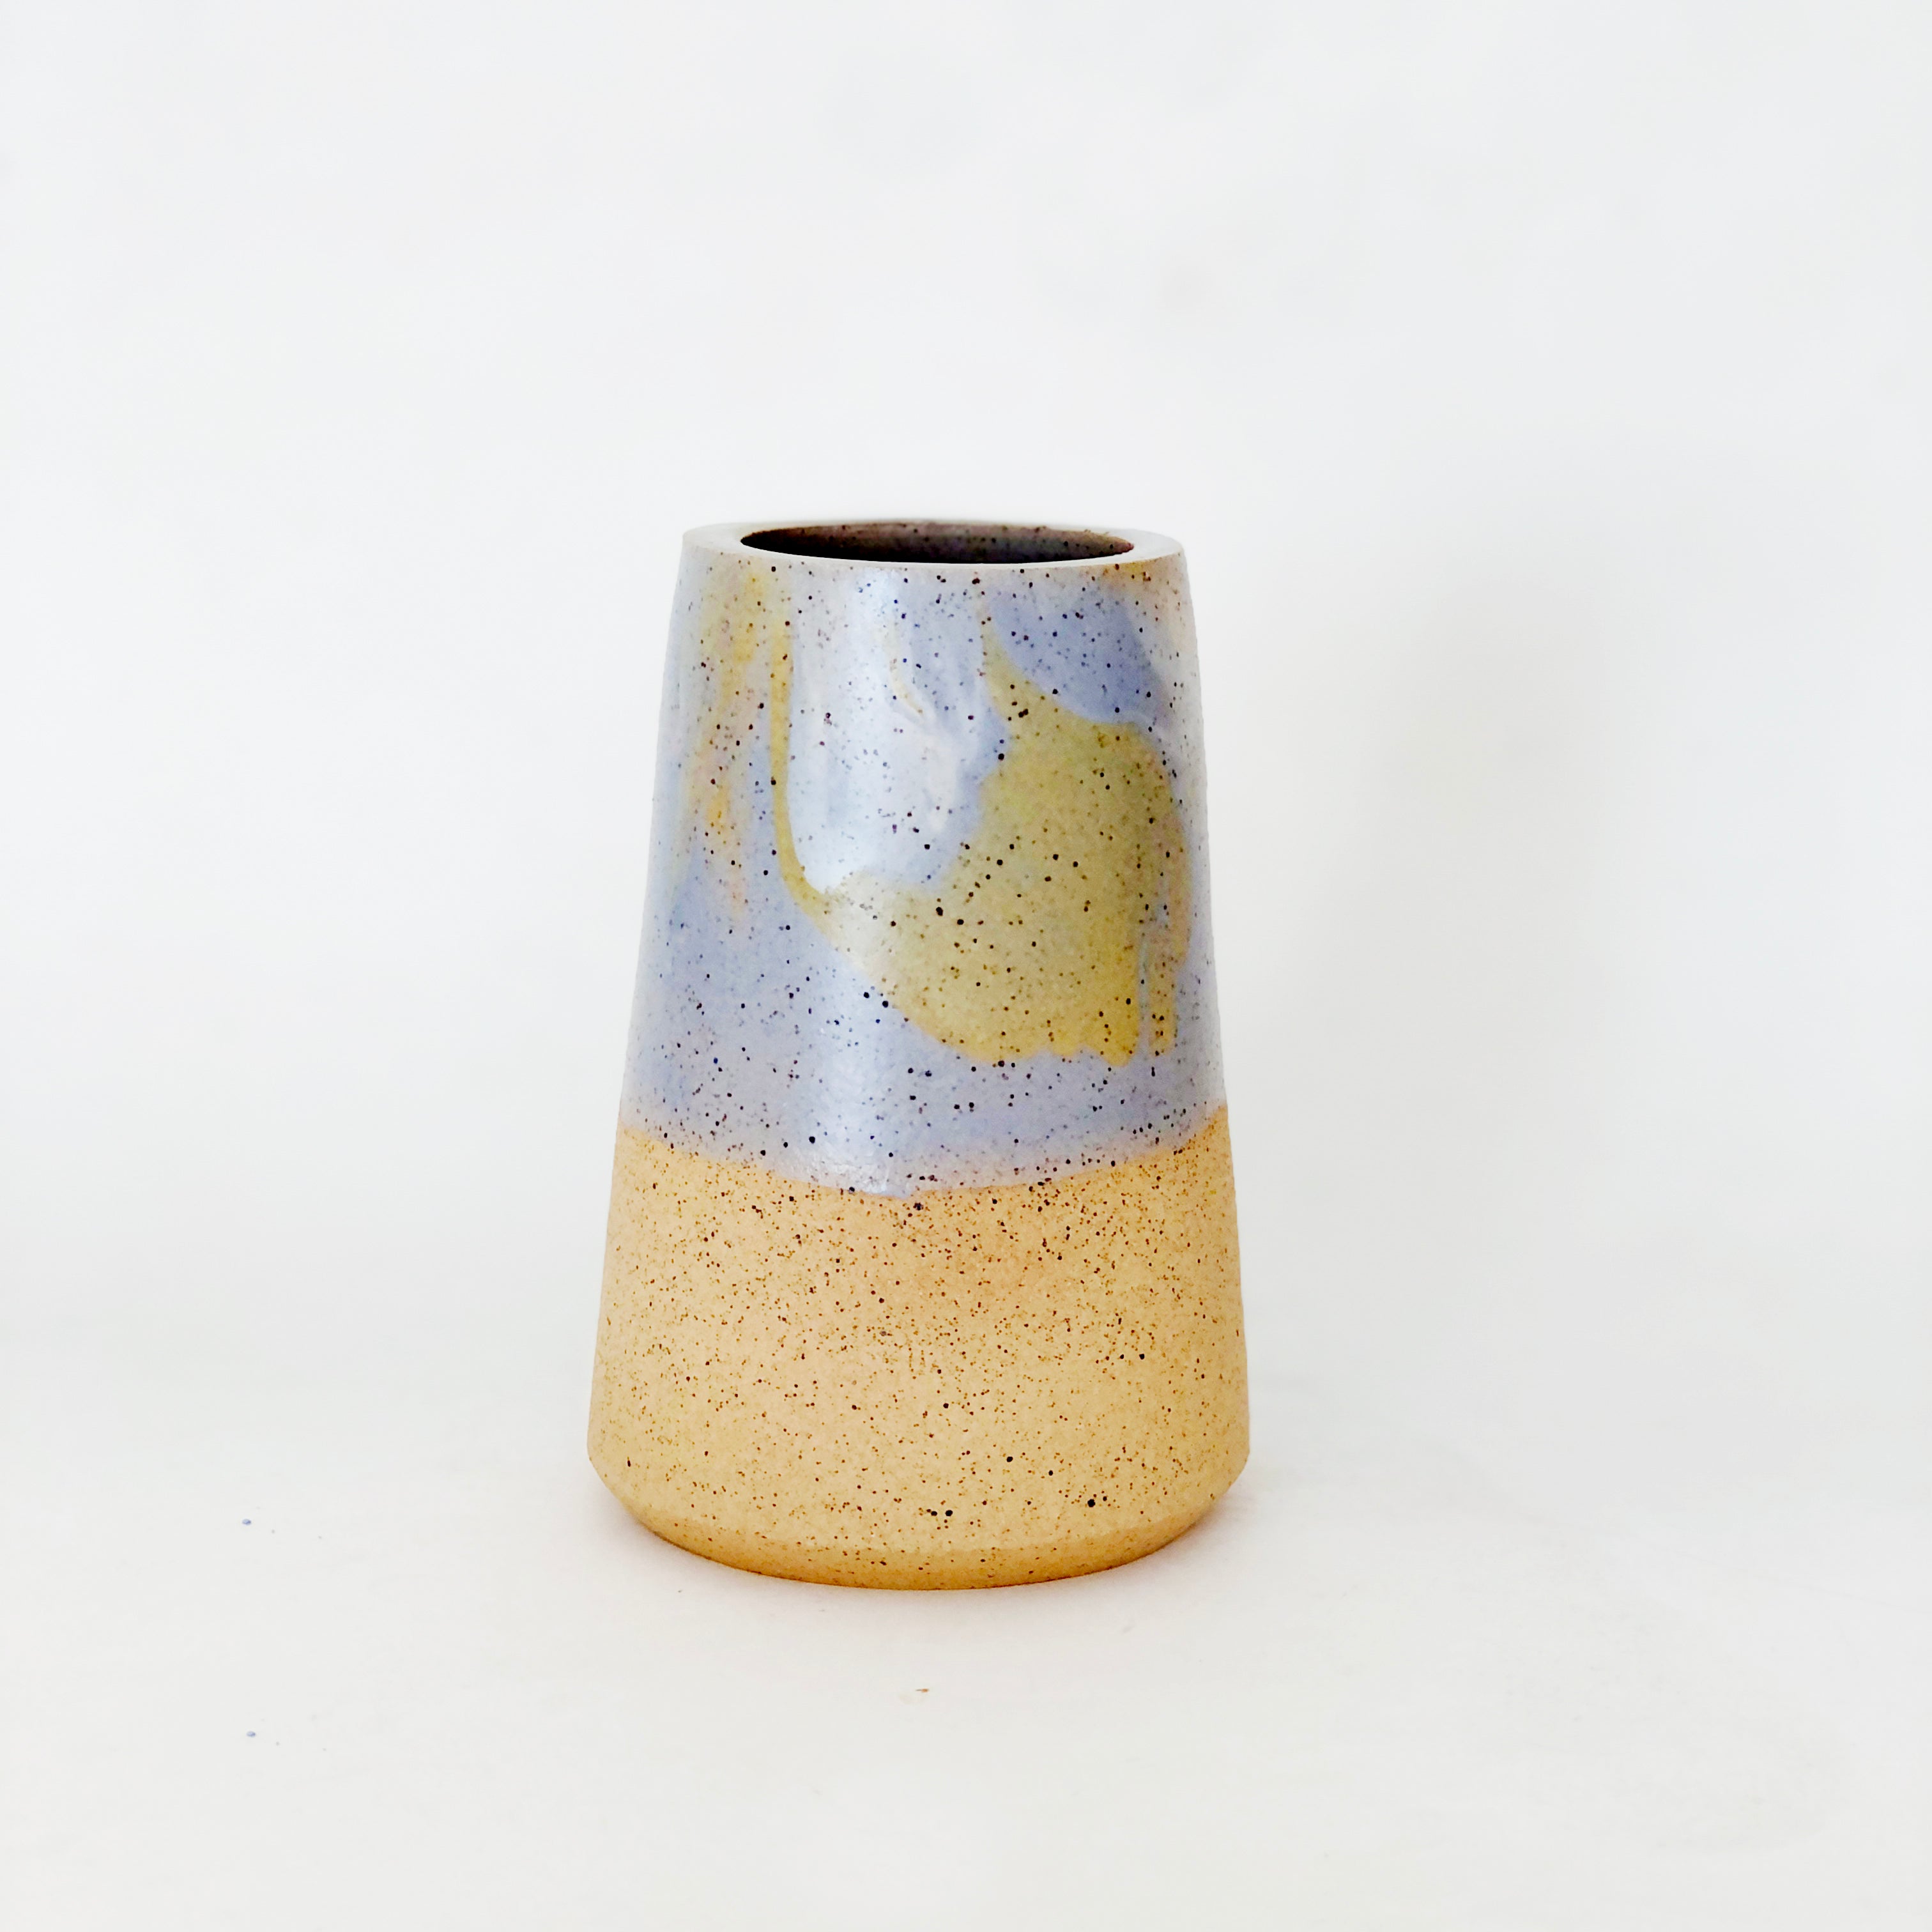 Marbled Sorbet Cone Vase